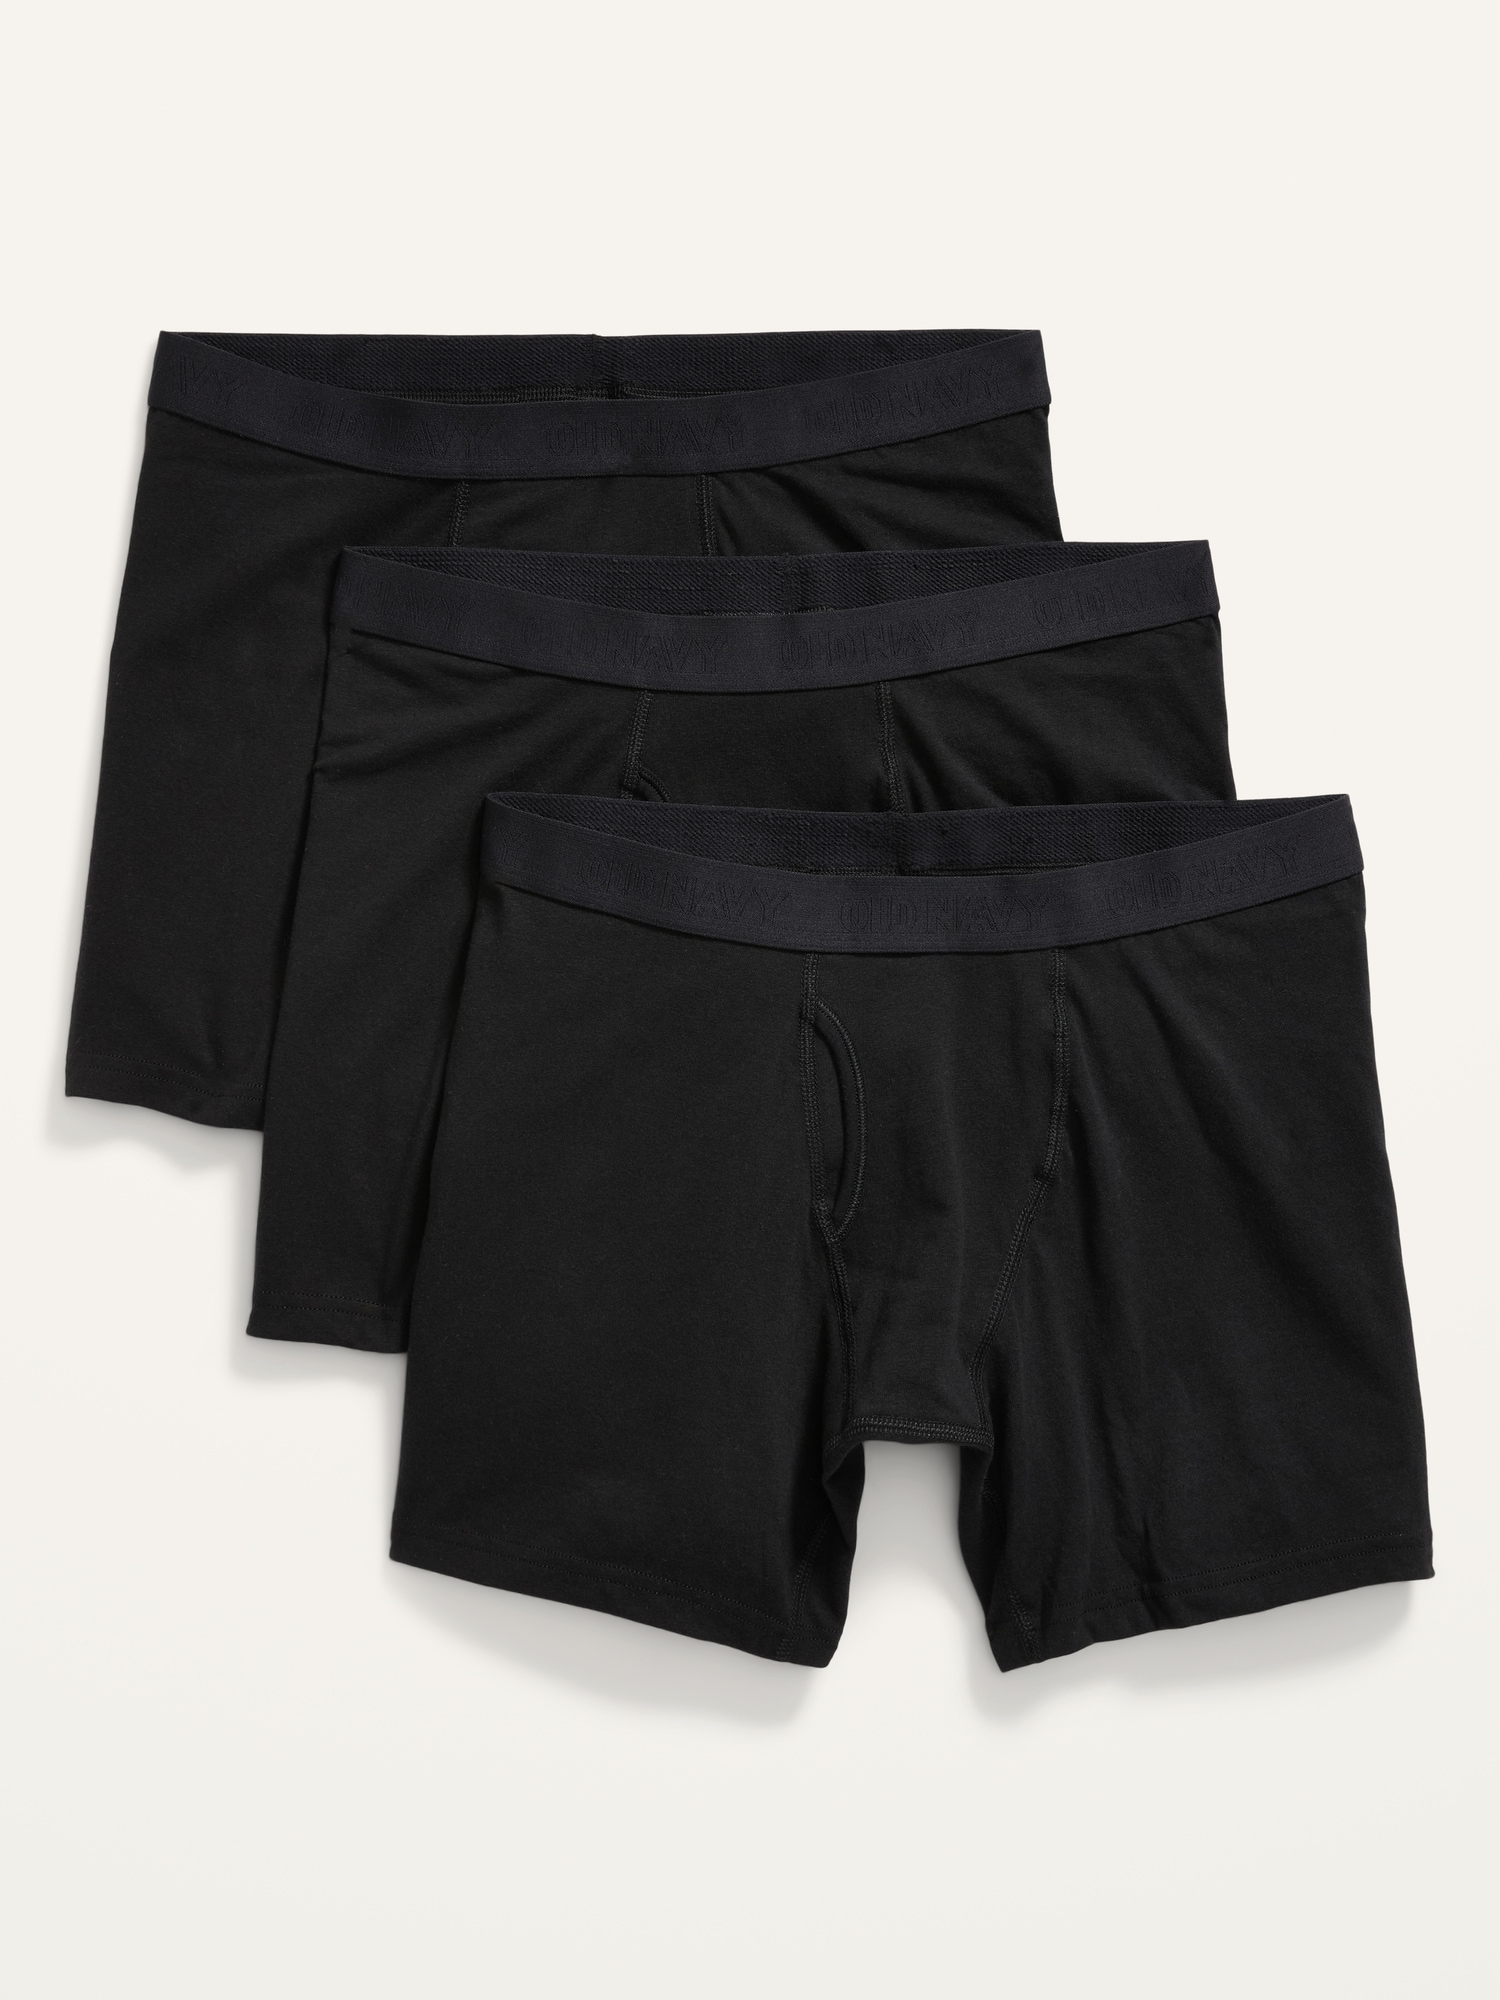 Old Navy - Printed Built-In Flex Boxer-Brief Underwear 3-Pack for